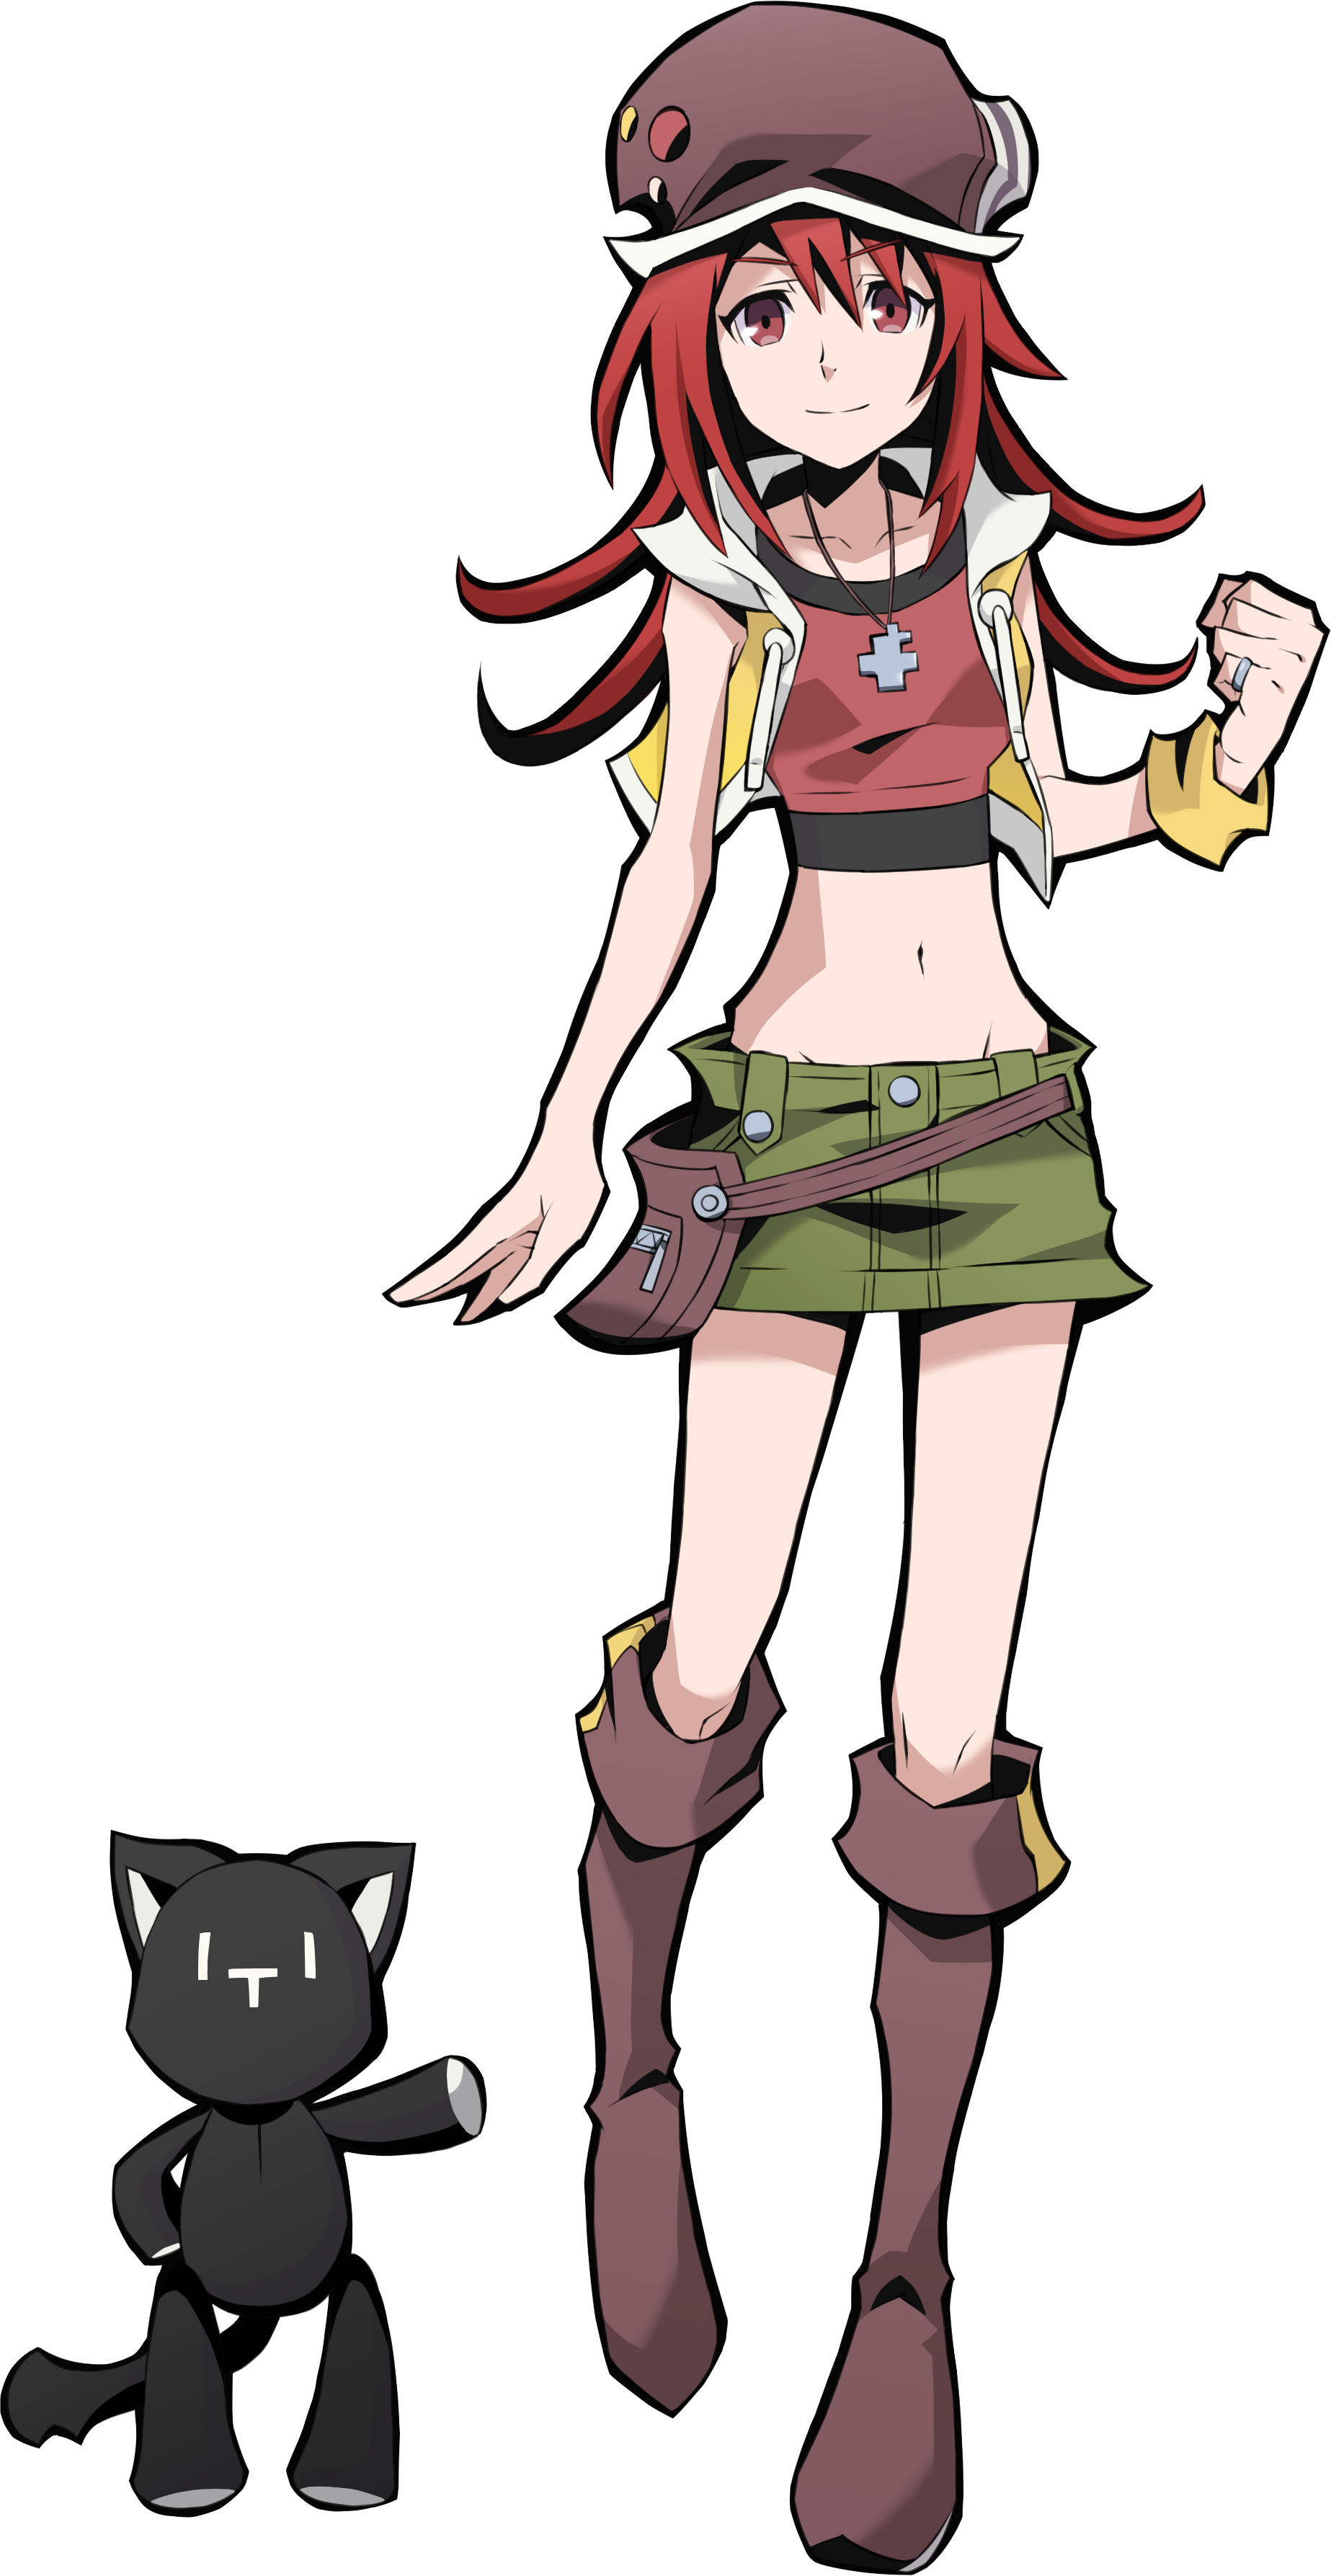 Shiki and Rebecca Characters from Edens Zero Anime Wallpaper 4k Ultra HD  ID8103